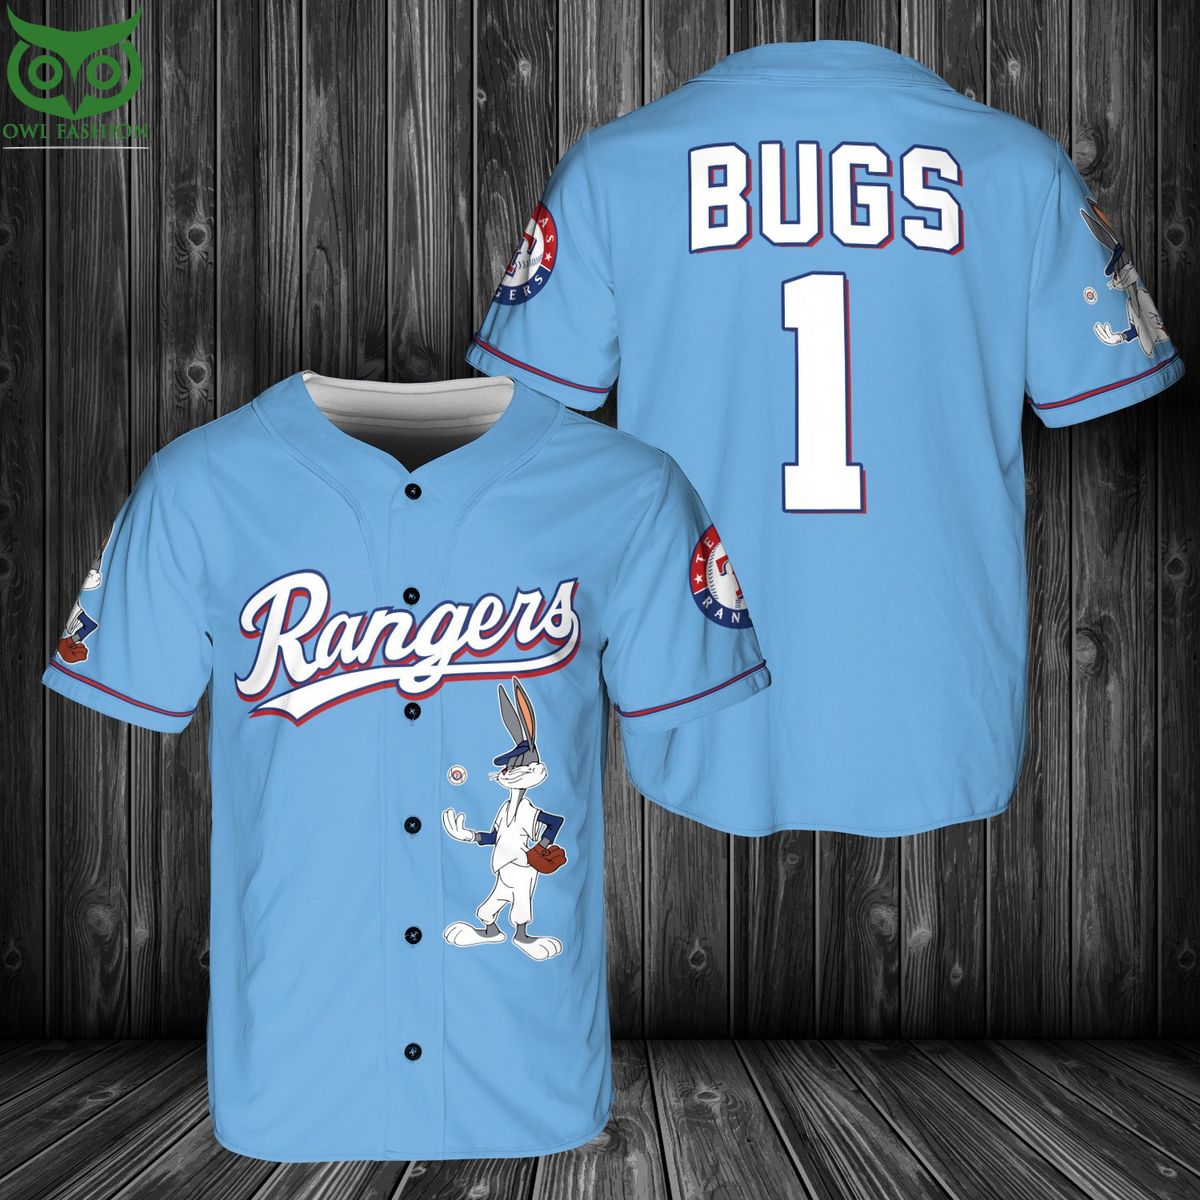 mlb texas rangers bugs bunny baseball jersey shirt 1 J9Xbu.jpg